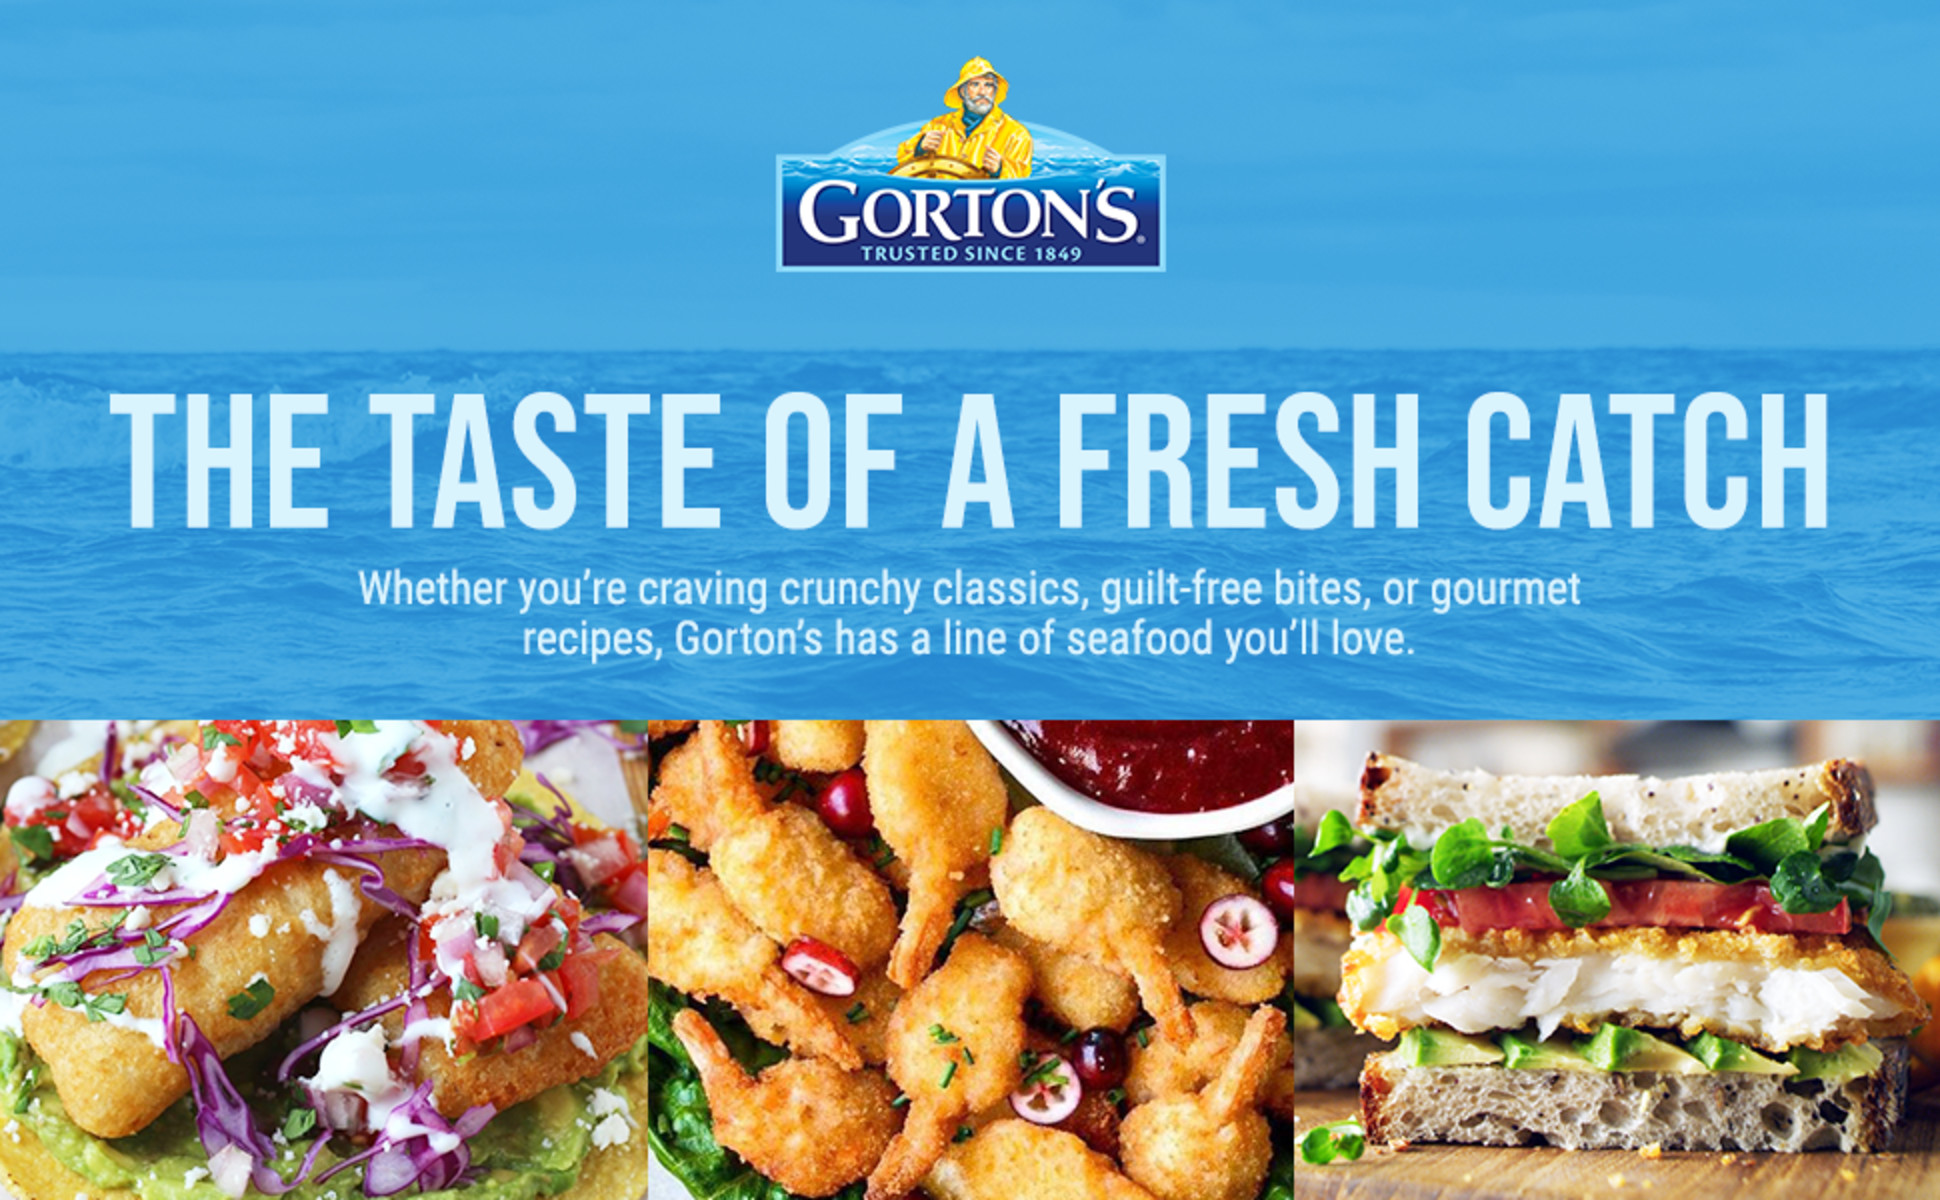 Gorton's Crunchy Breaded Fish 100% Whole Fillets, Wild Caught Pollock,  Frozen, 26 Count, 50 oz. 